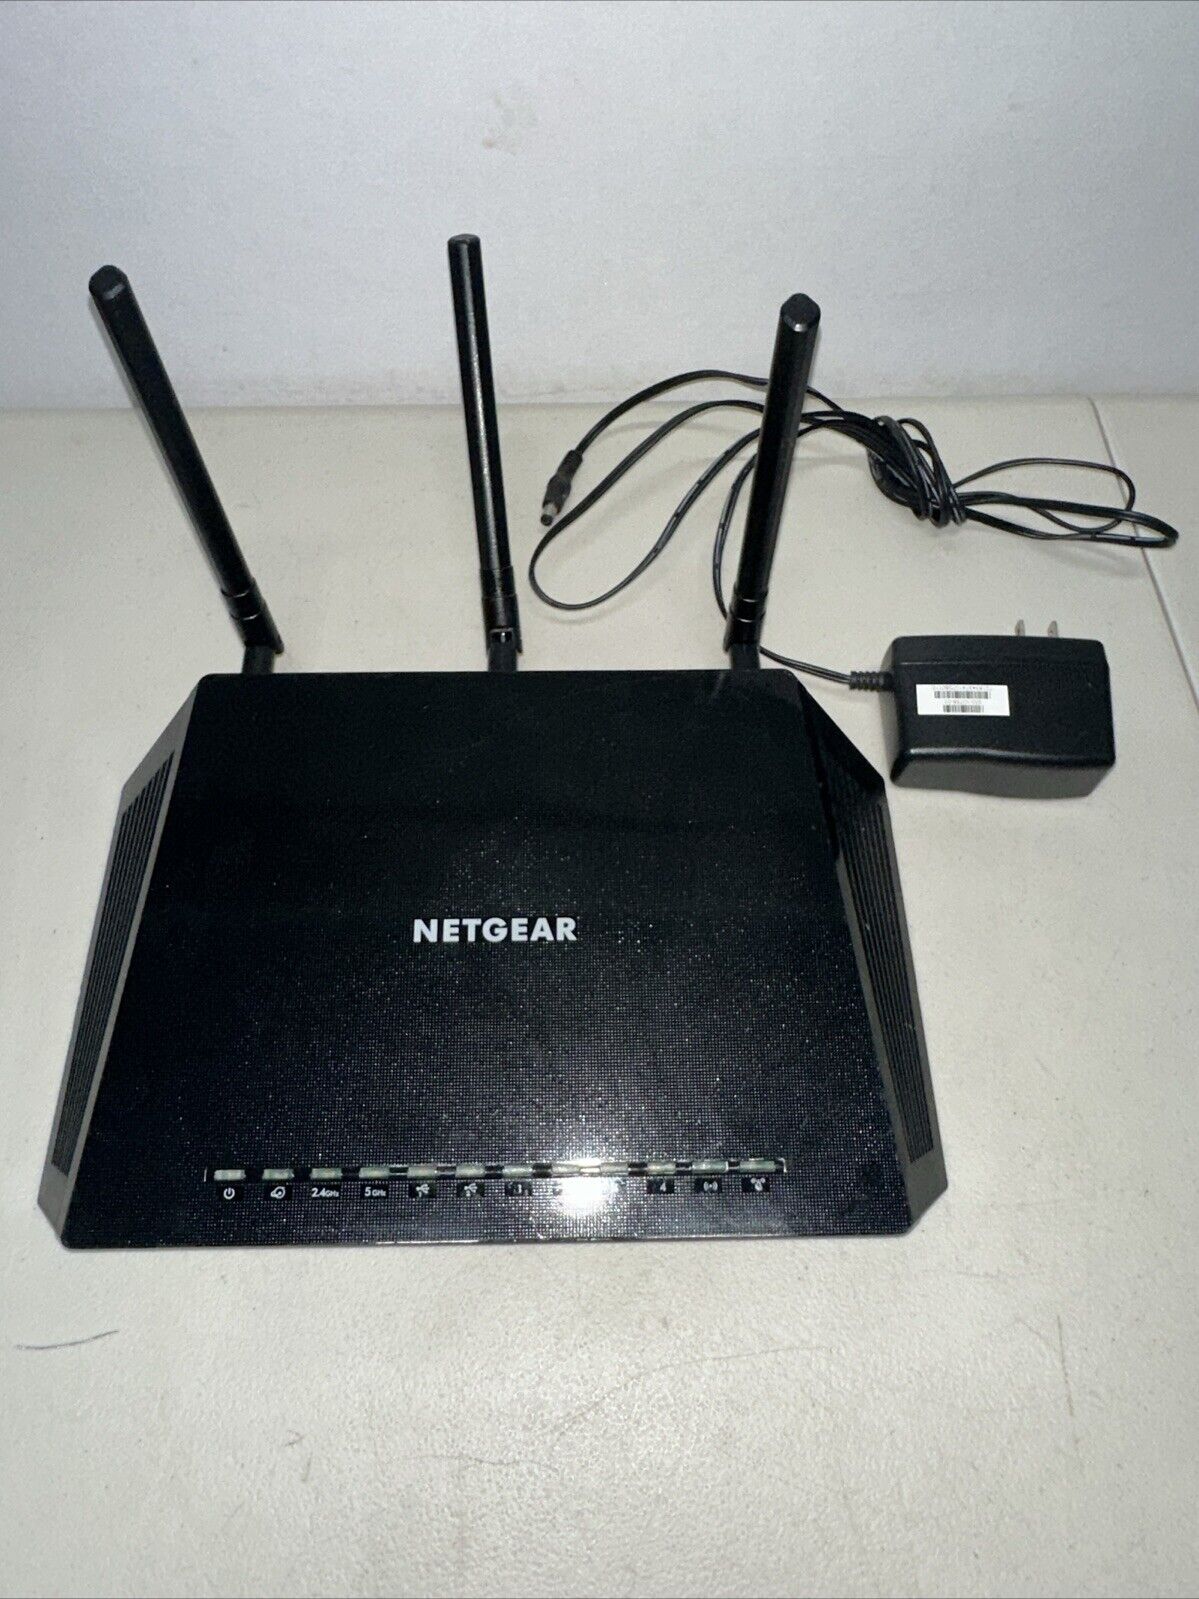 NETGEAR R6400V2 Nighthawk AC1750 Smart WiFi Router *Tested & Free-Ship* OEM